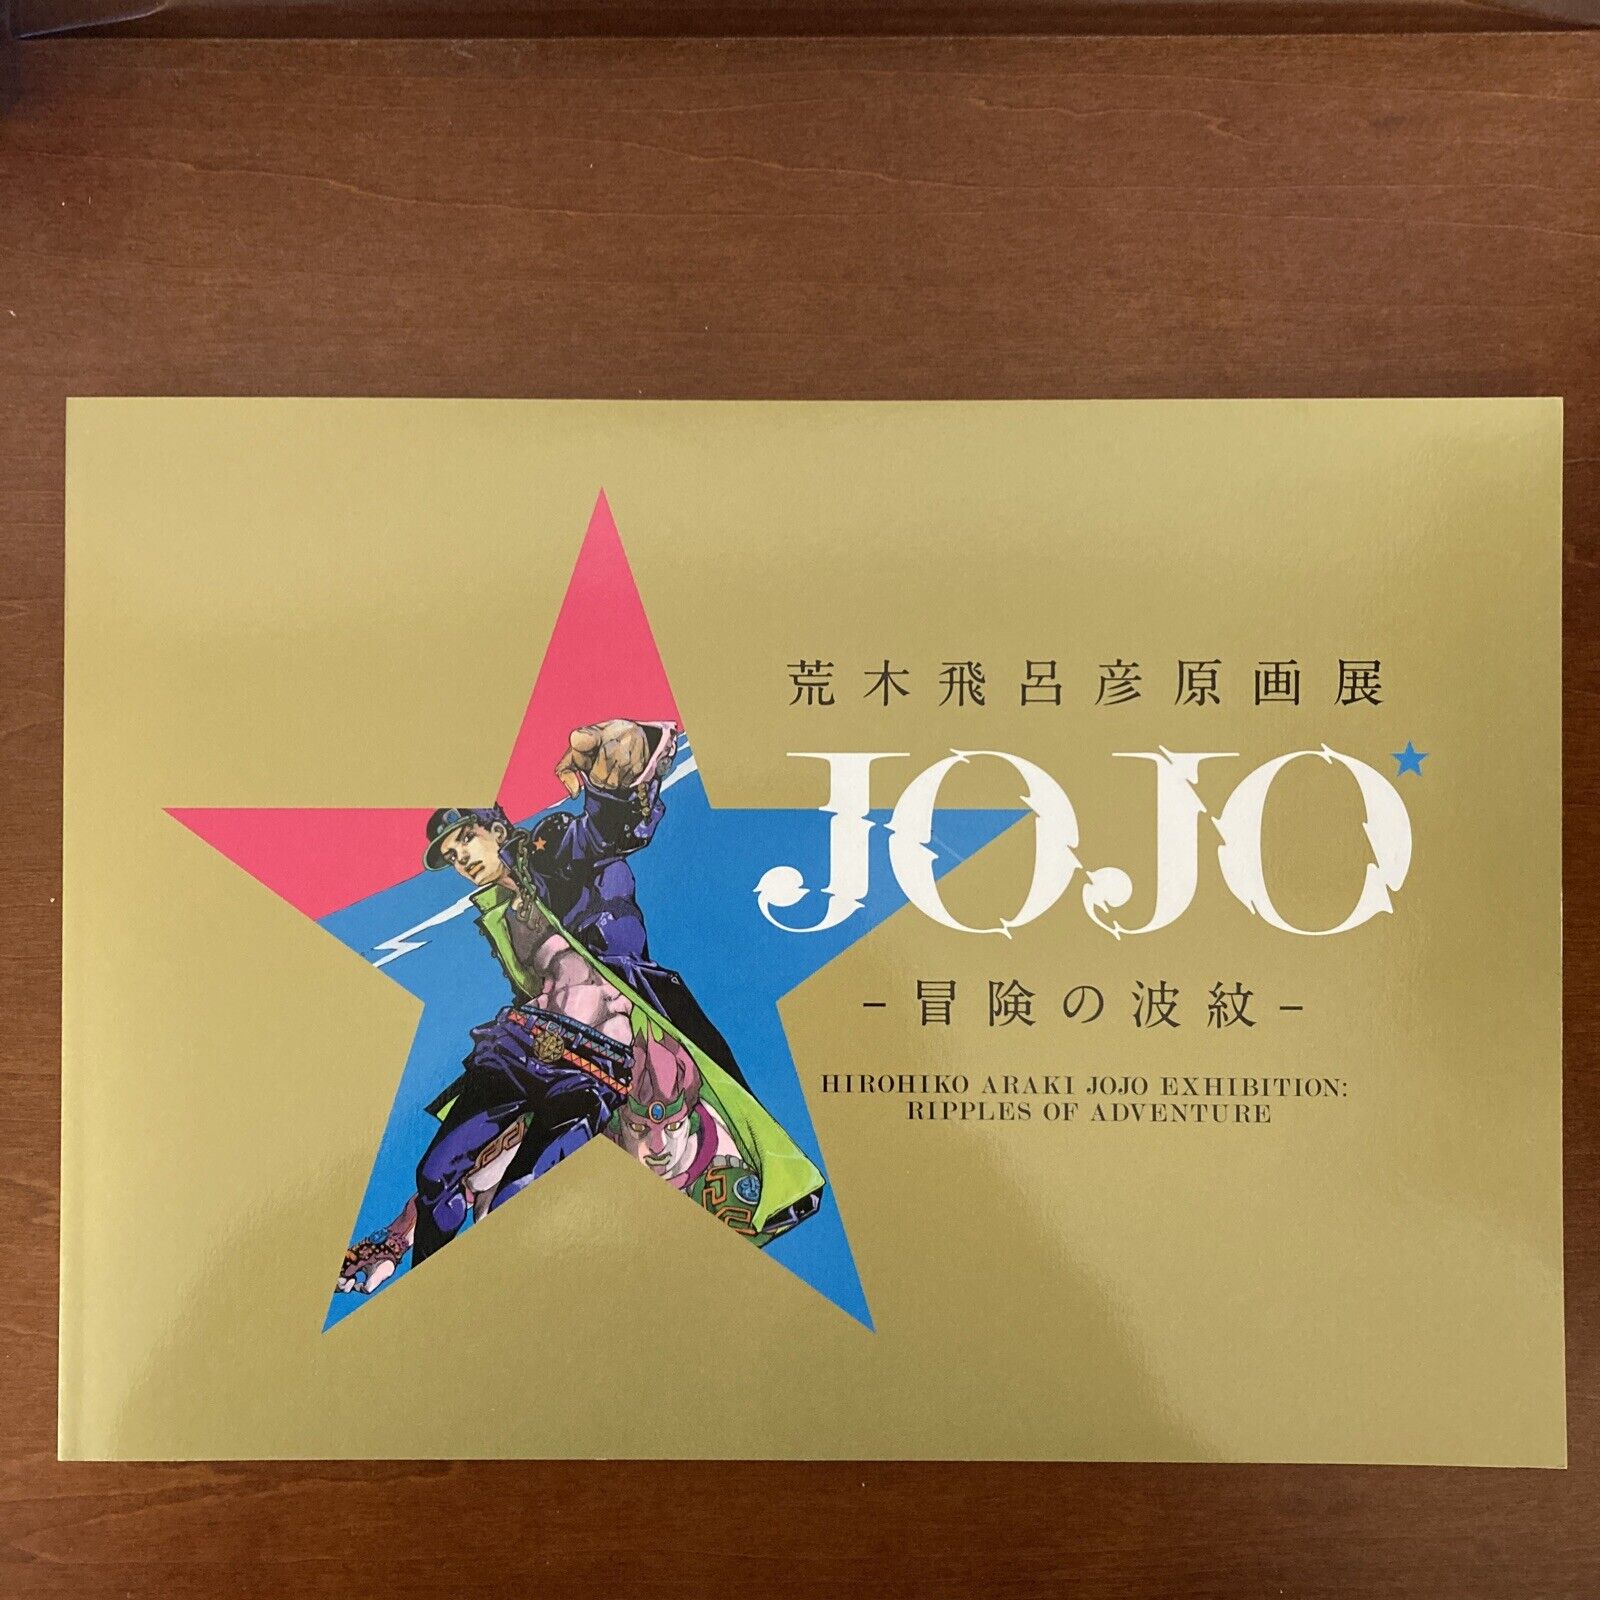 HIROHIKO ARAKI JOJO Exthbition Limted Official Art Works Book Tokyo Ver